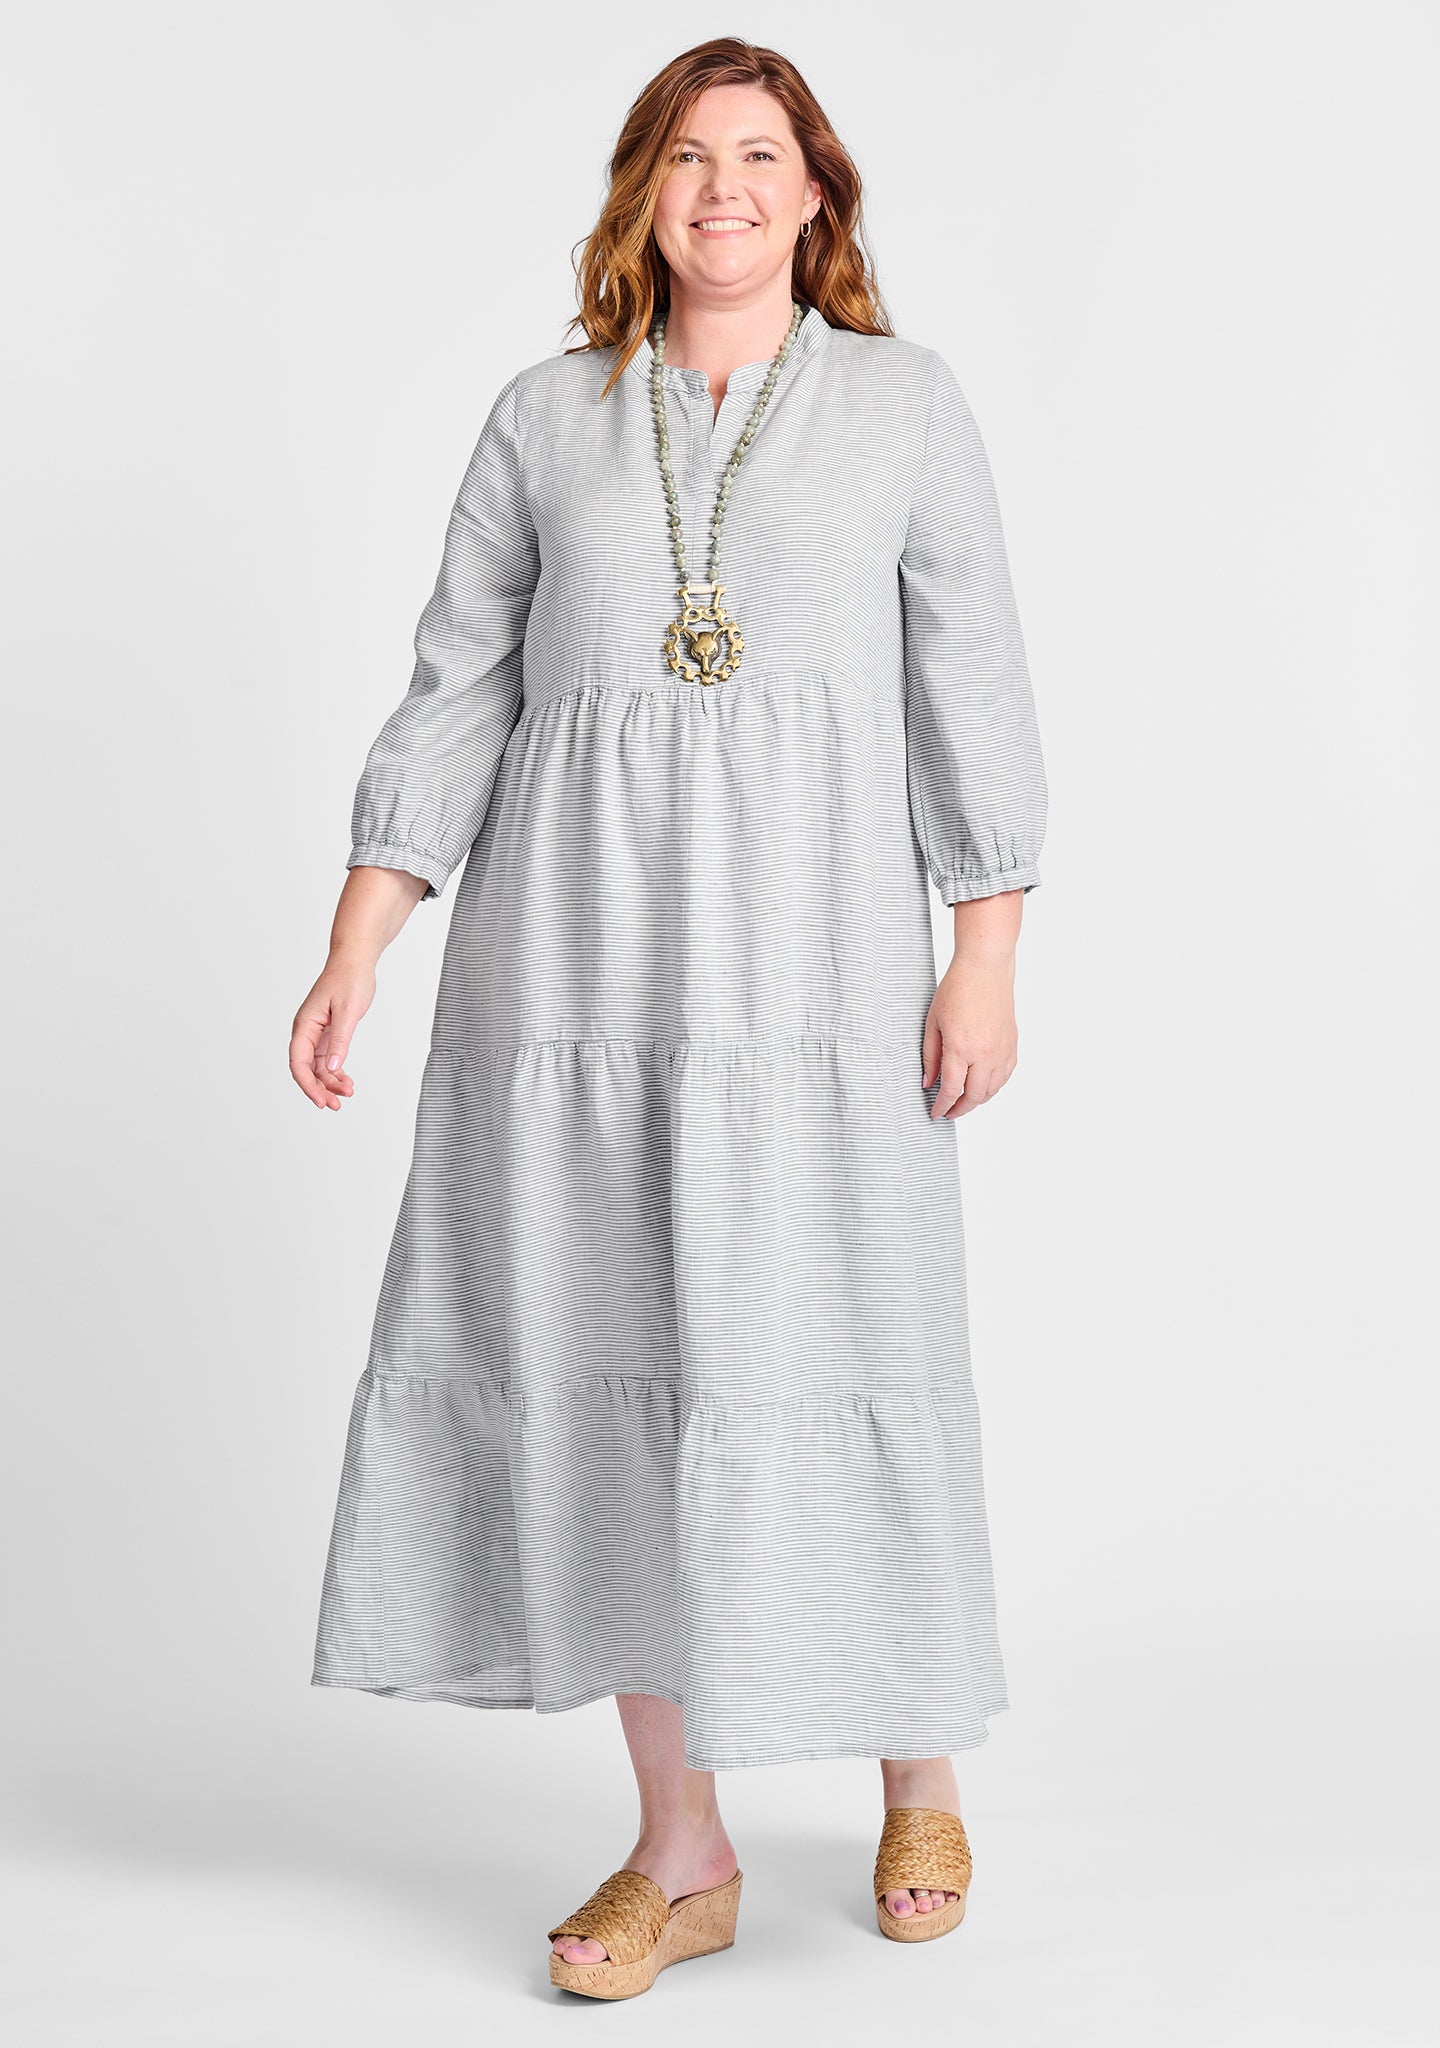 FLAX linen dress in grey